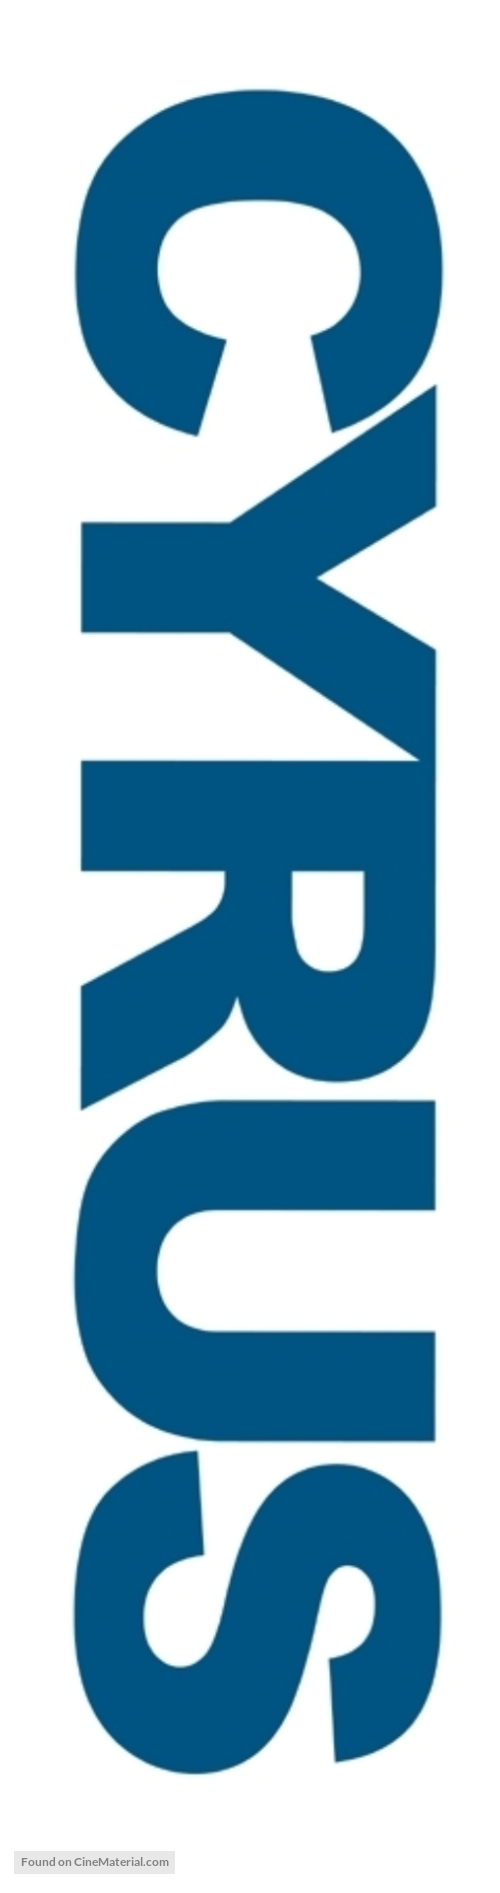 Cyrus - Logo